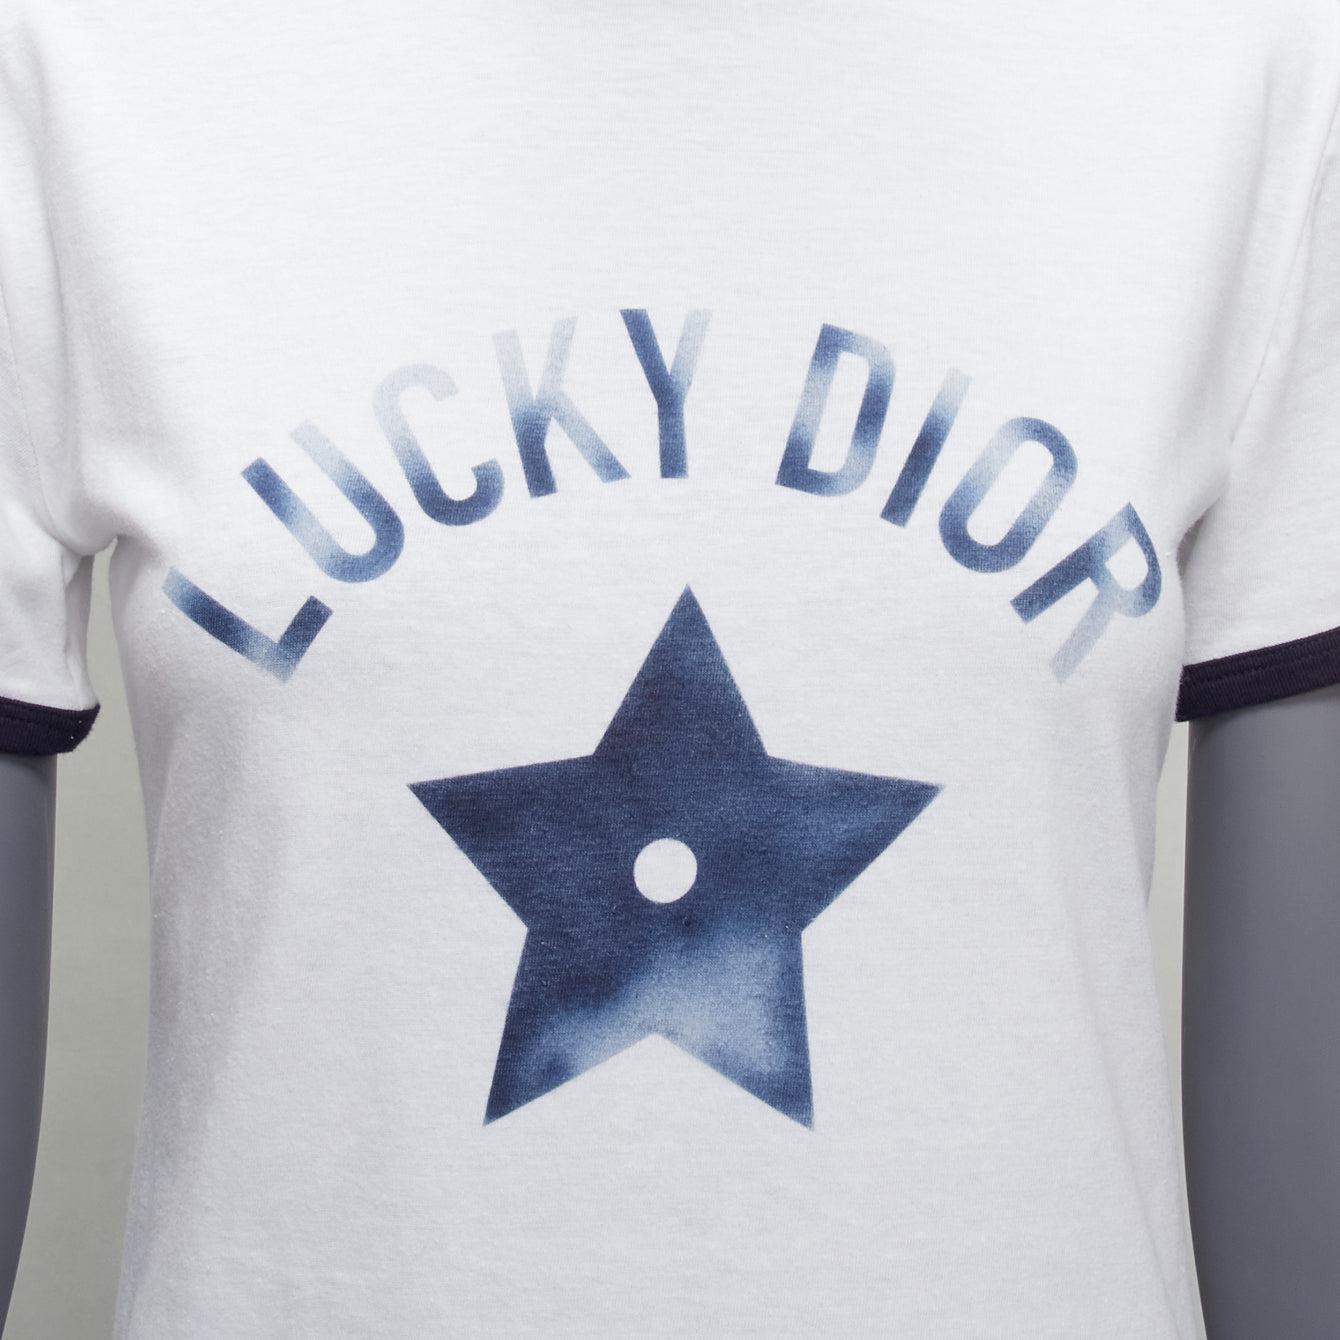 CHRISTIAN DIOR 2022 Lucky white blue ombre star logo ringer tshirt XS 2